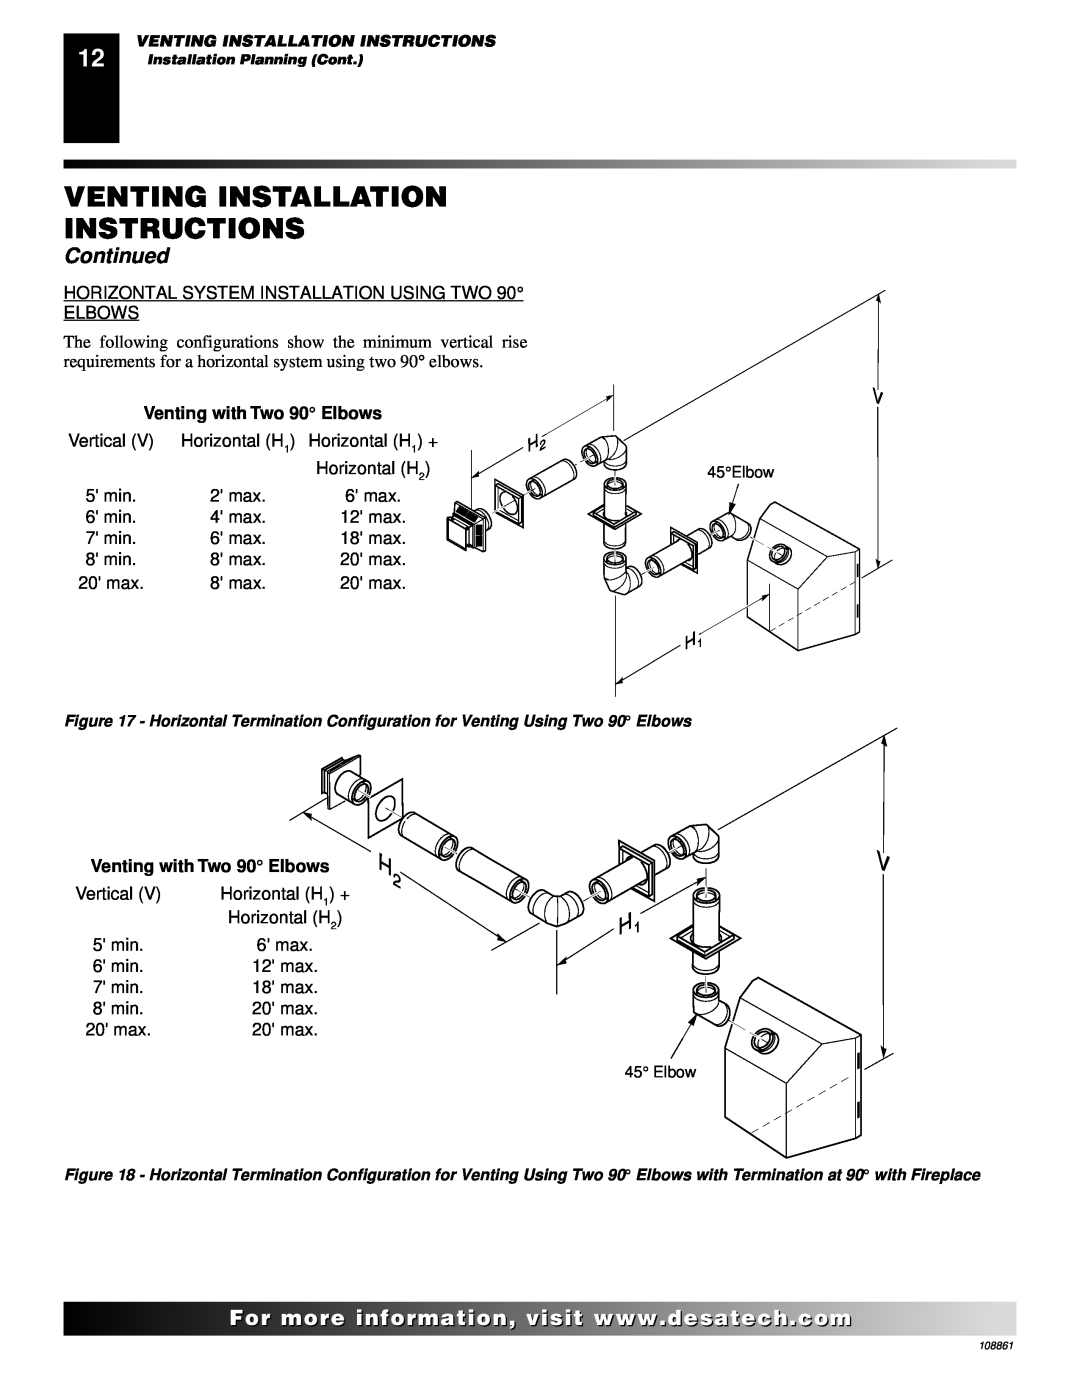 Desa (V)V36N, CHDV47NR, CHDV47PR installation manual Venting Installation Instructions, Continued, Venting with Two 90 Elbows 